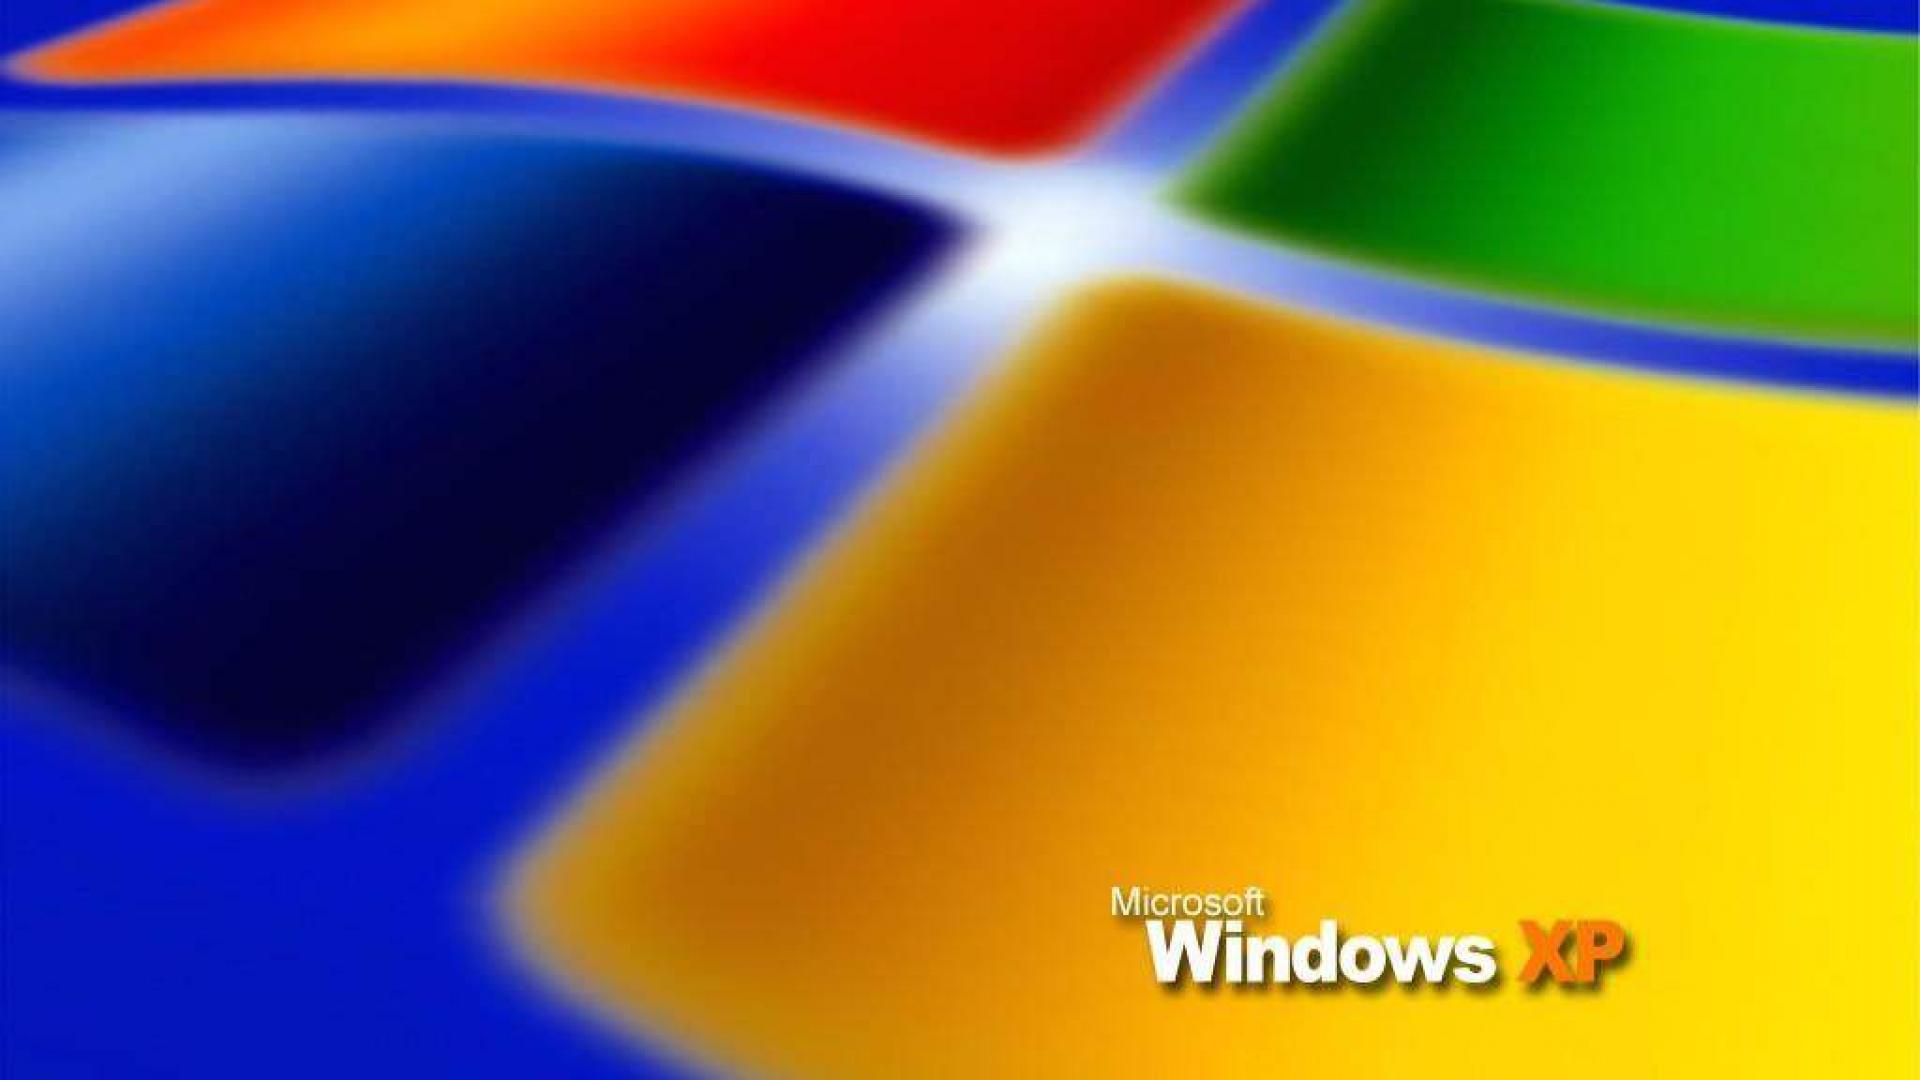 Windows Xp Logo, 1920x1080 HD Wallpaper and FREE Stock Photo